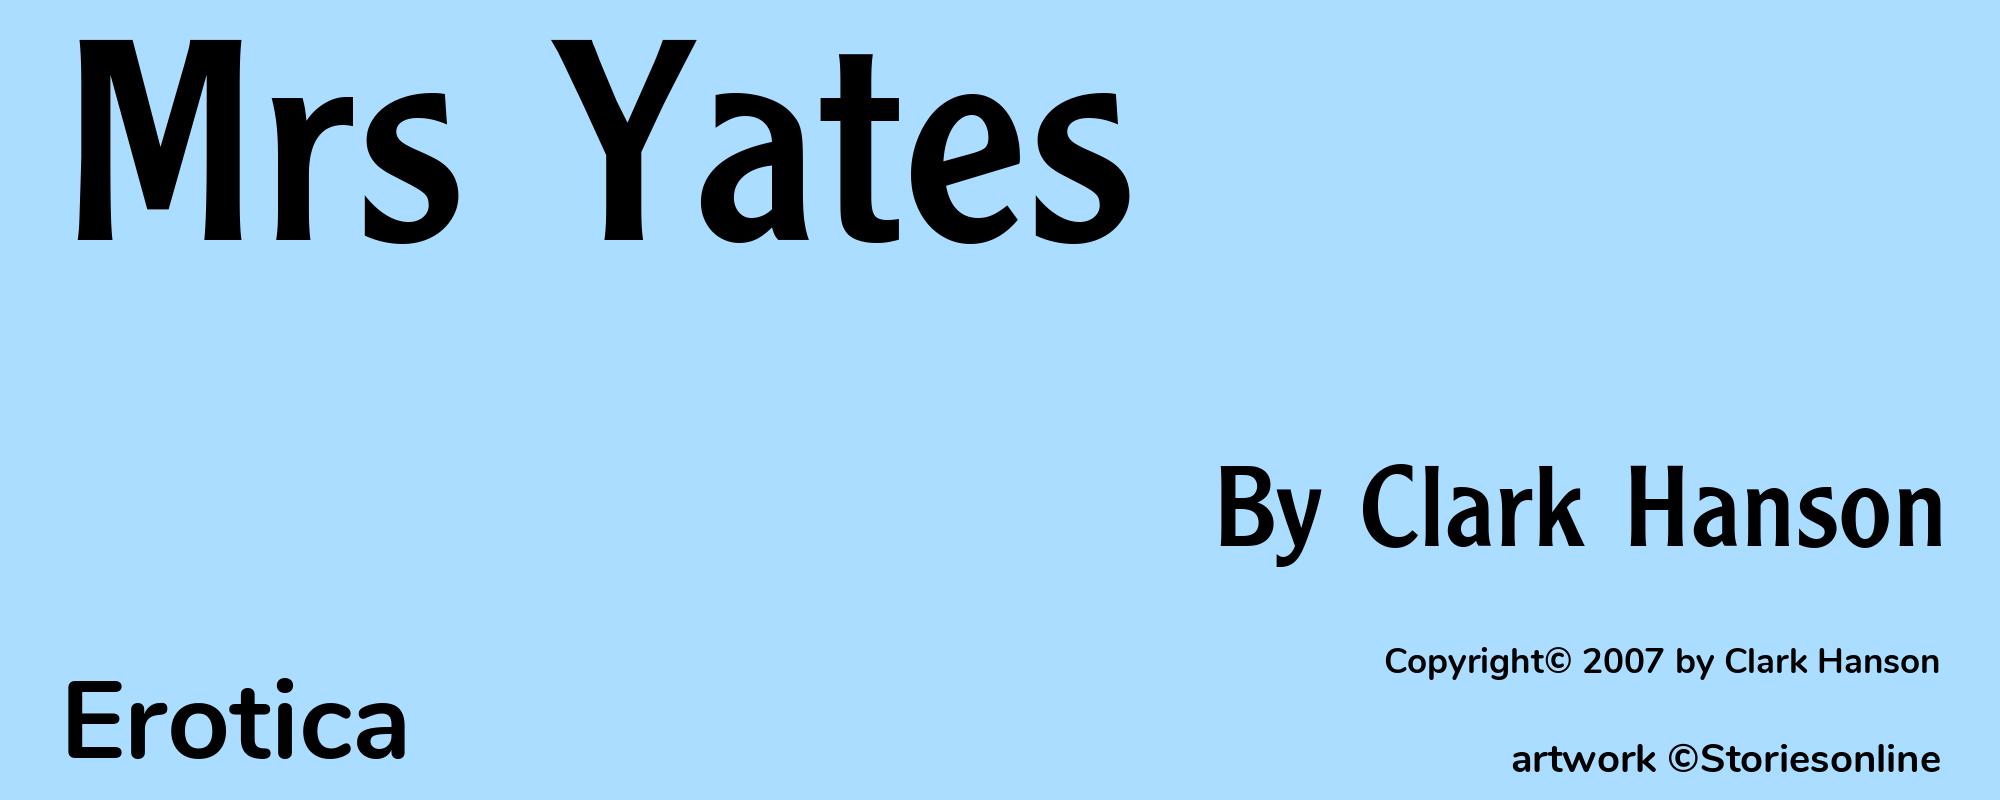 Mrs Yates - Cover